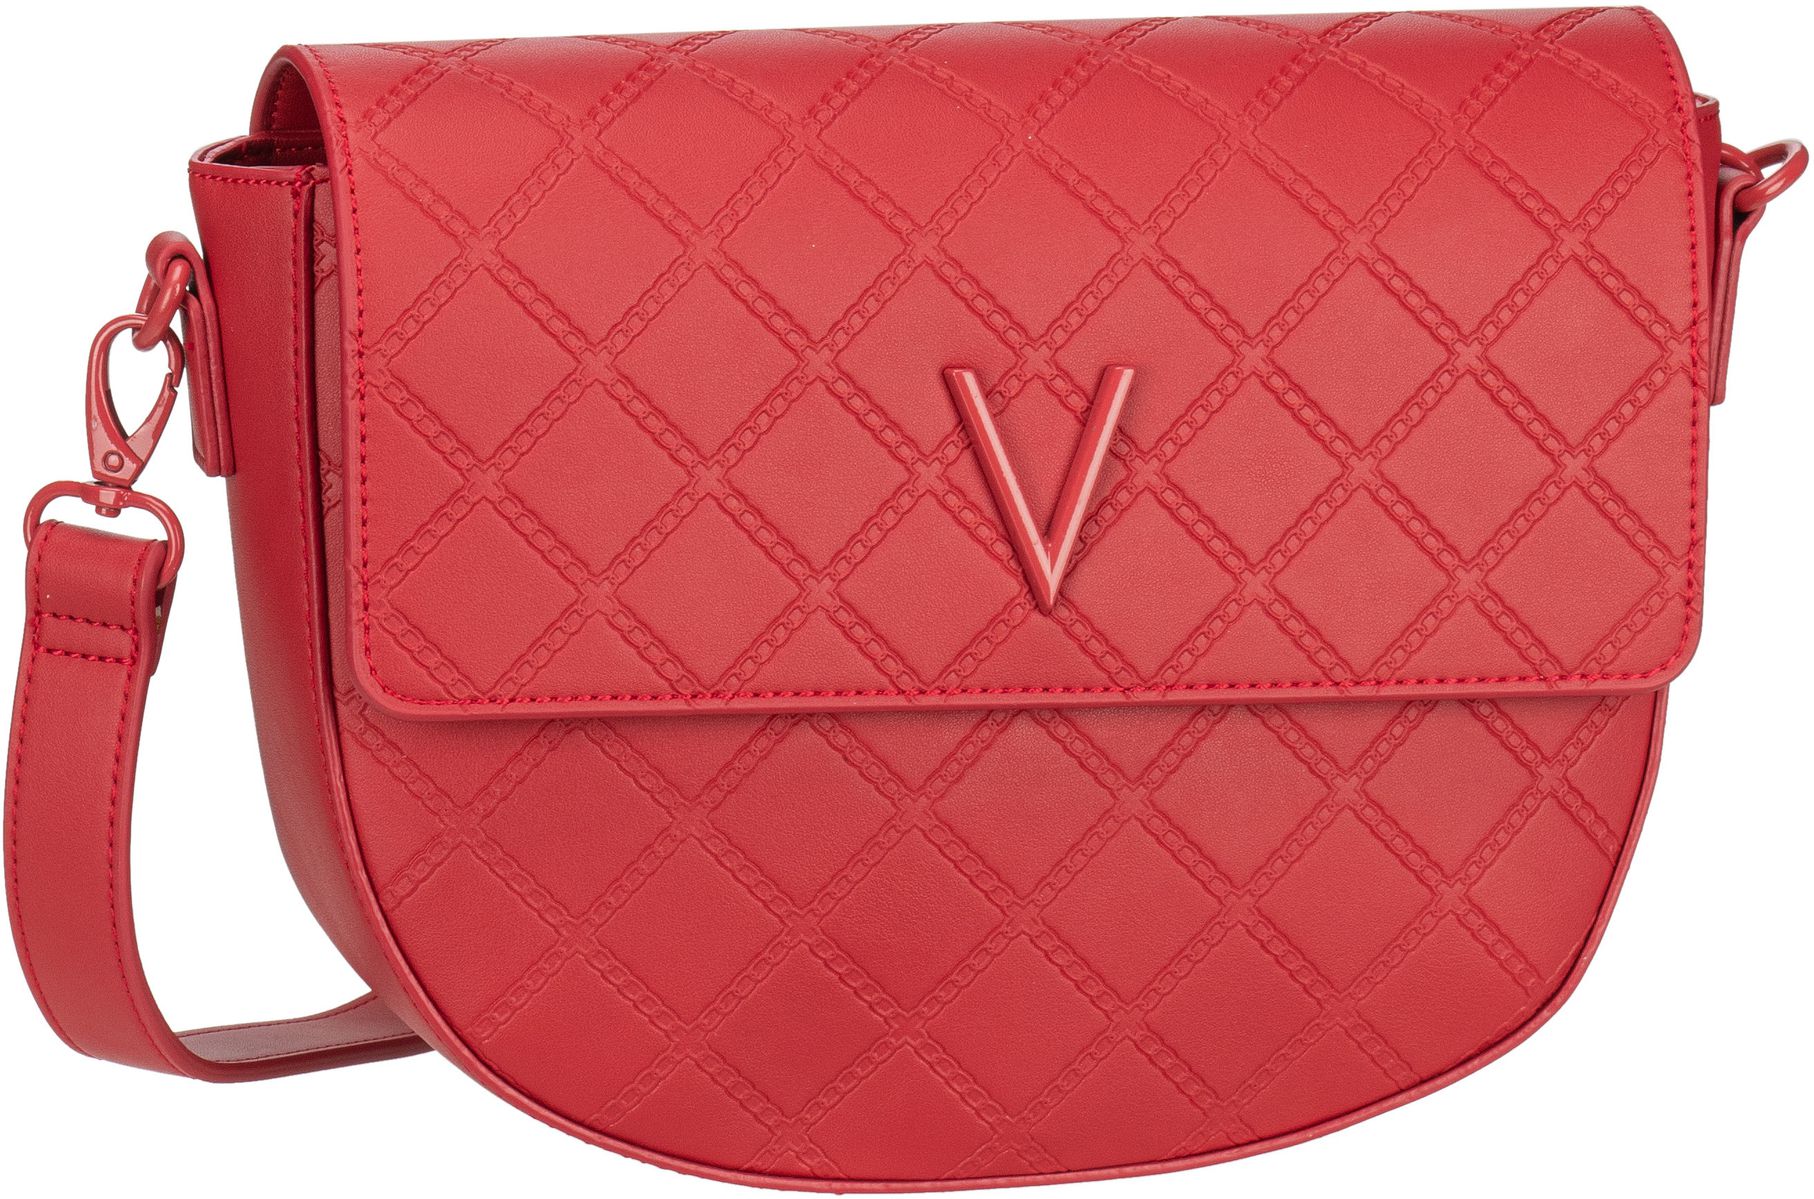 Valentino Blush Flap Bag 802 - Rosso